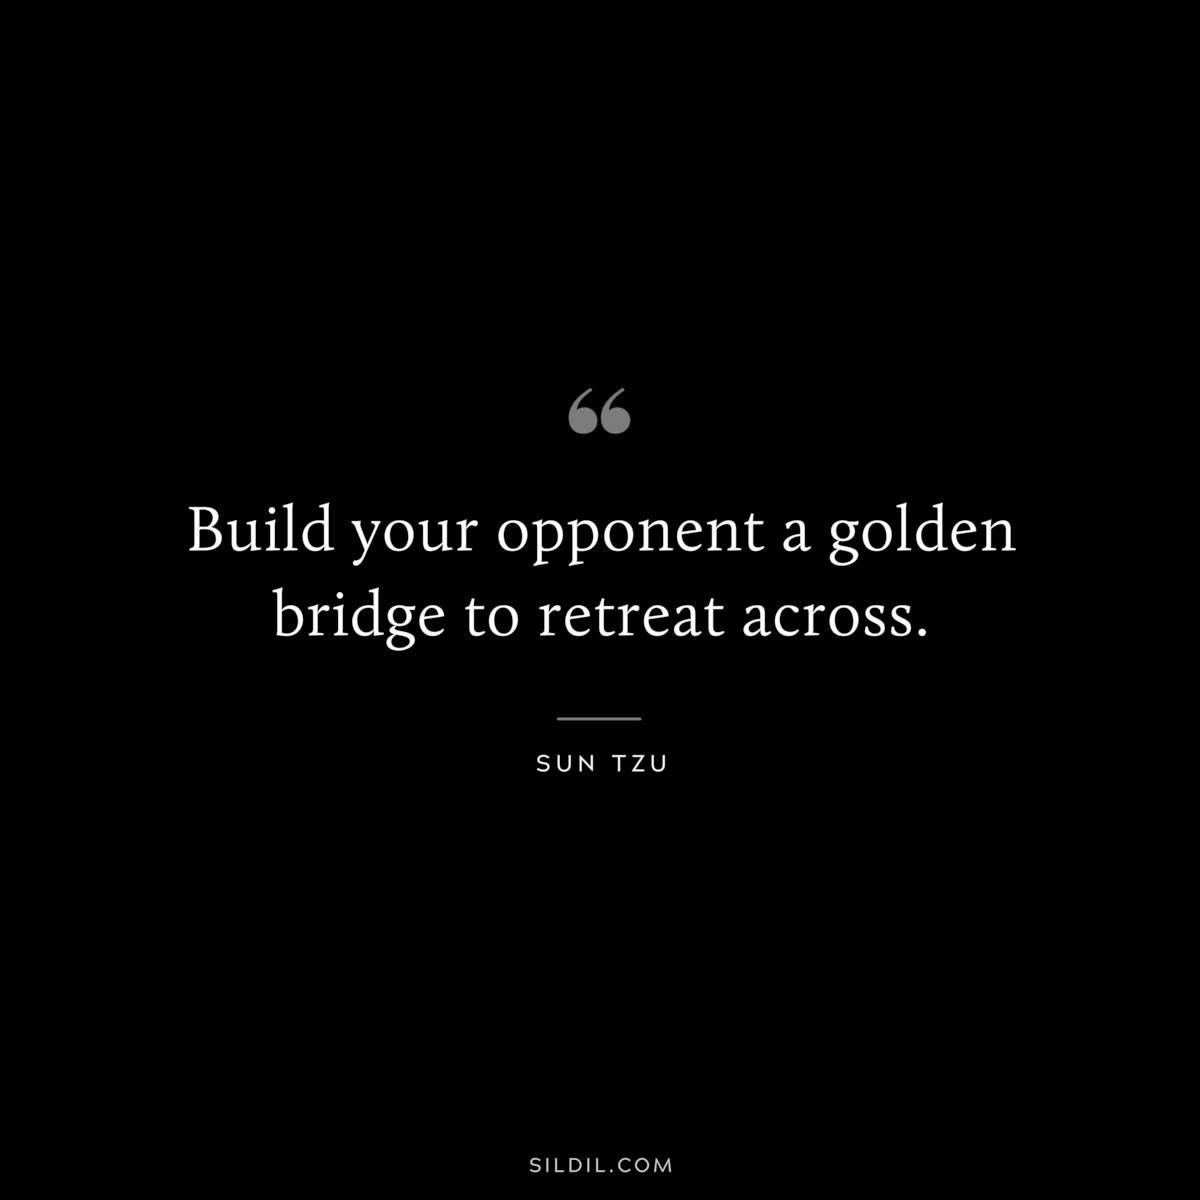 Build your opponent a golden bridge to retreat across.― Sun Tzu